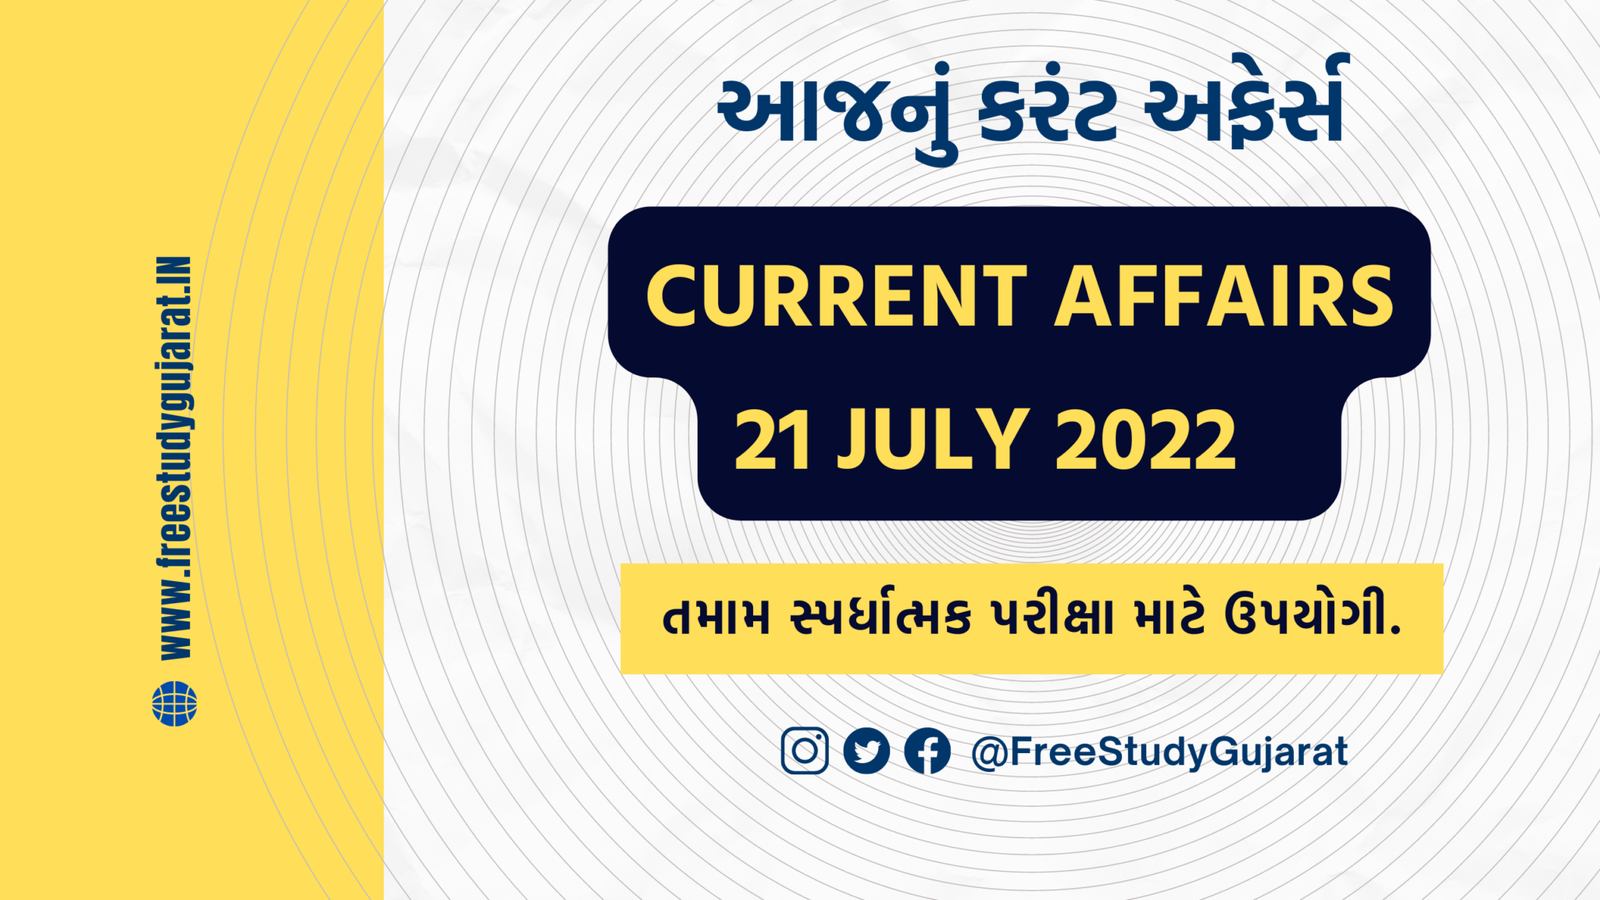 21 JULY 2022 CURRENT AFFAIRS IN GUJARATI | કરંટ અફેર્સ ગુજરાતીમાં